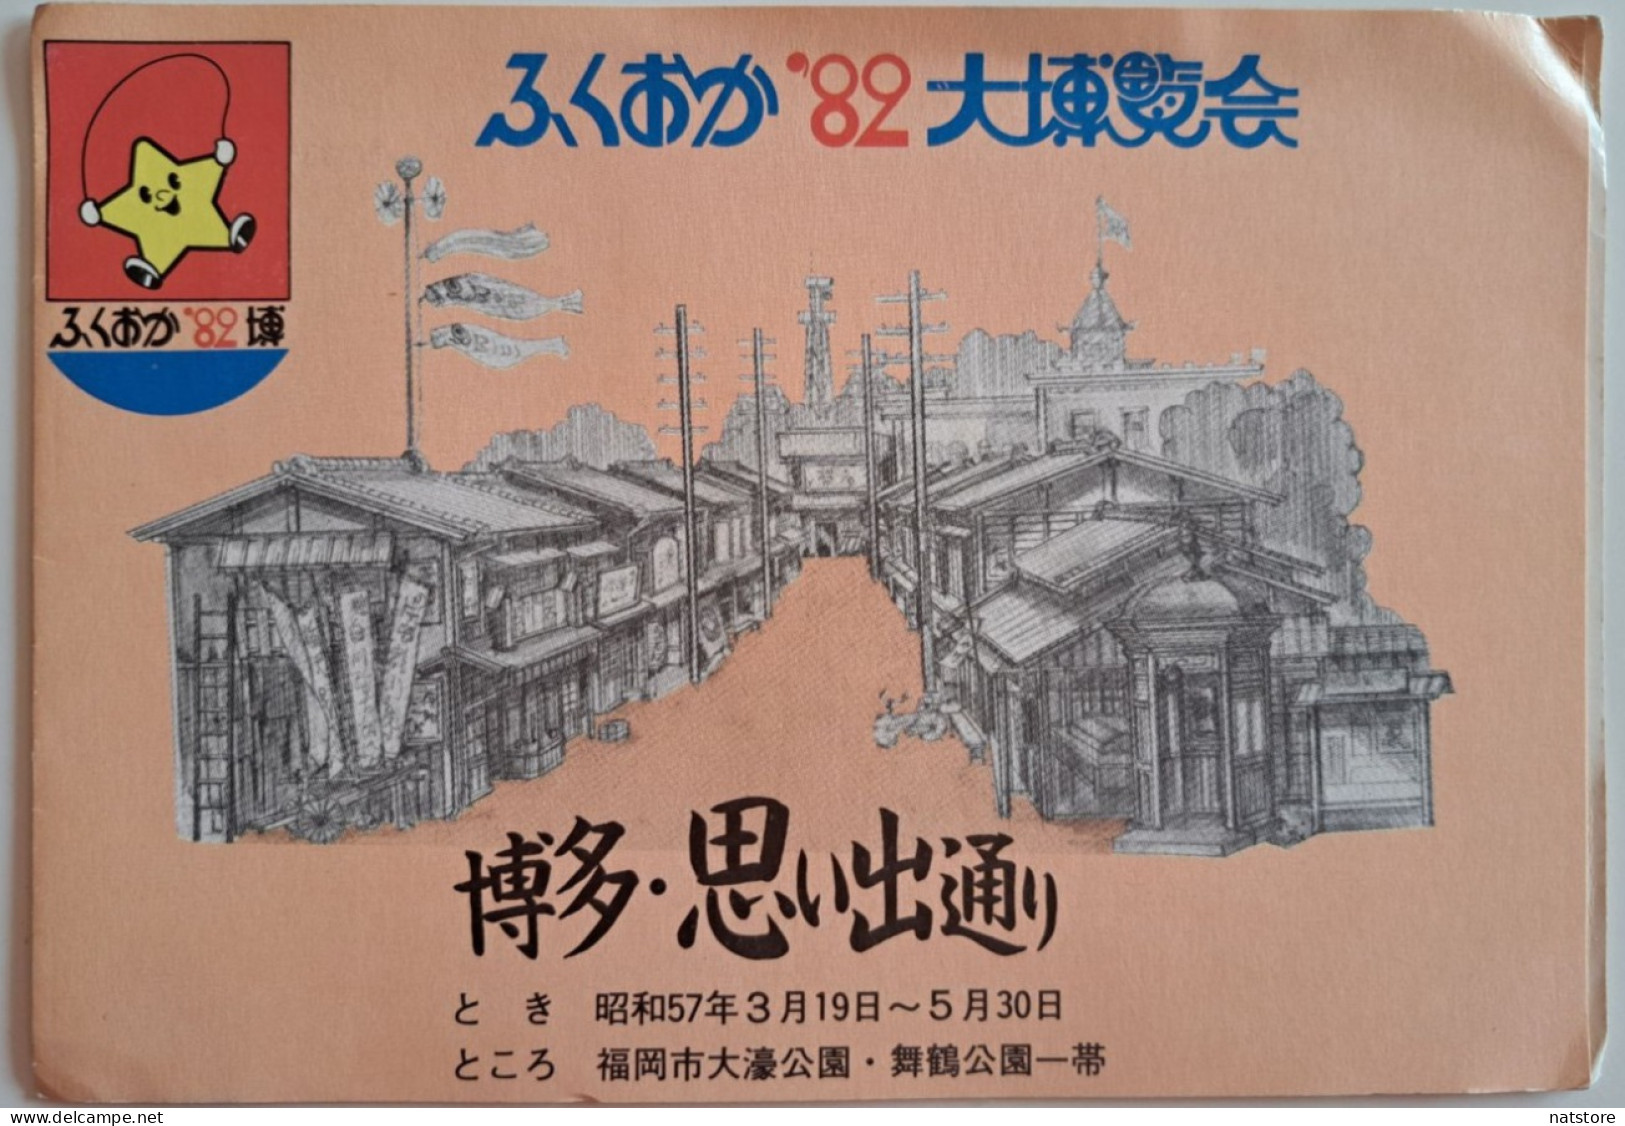 1982..JAPAN..BOOKLET WITH STAMPS+SPECIALCANCELLATION..FUKUOKA'82. GREAT EXHIBITION - Cartas & Documentos